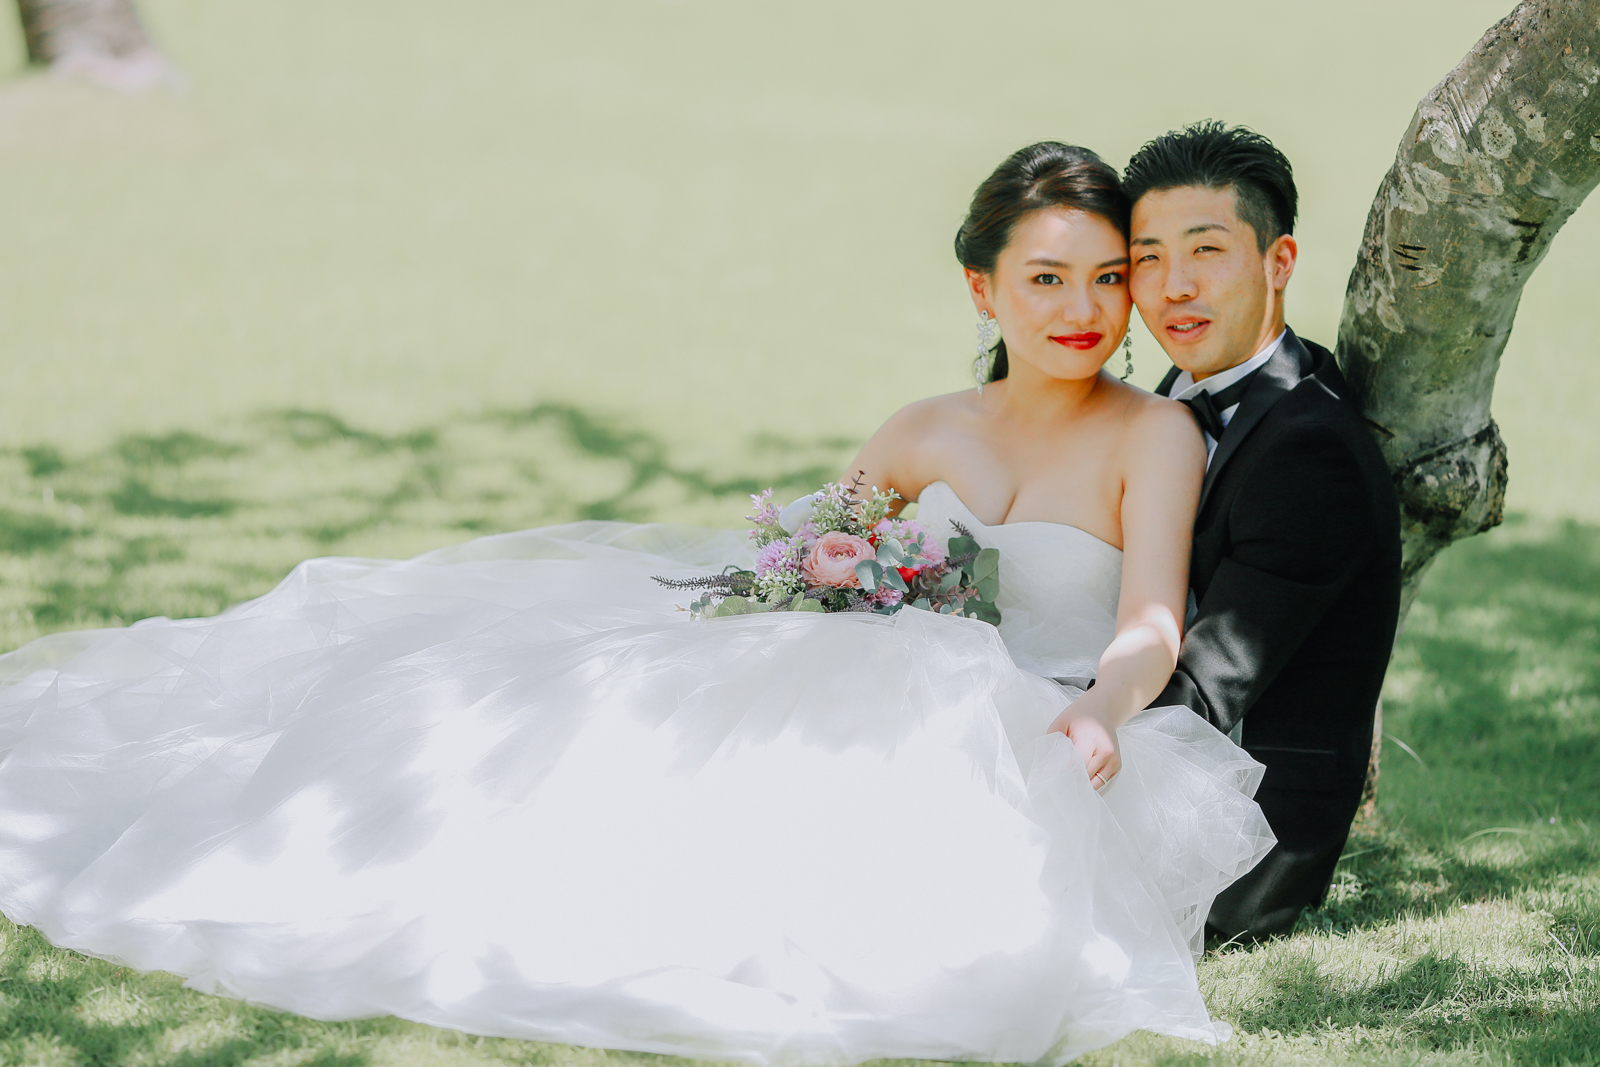 ctp 3 7 - Shojiro & Hiroko's Shangrila Mactan Cebu Intimate Wedding